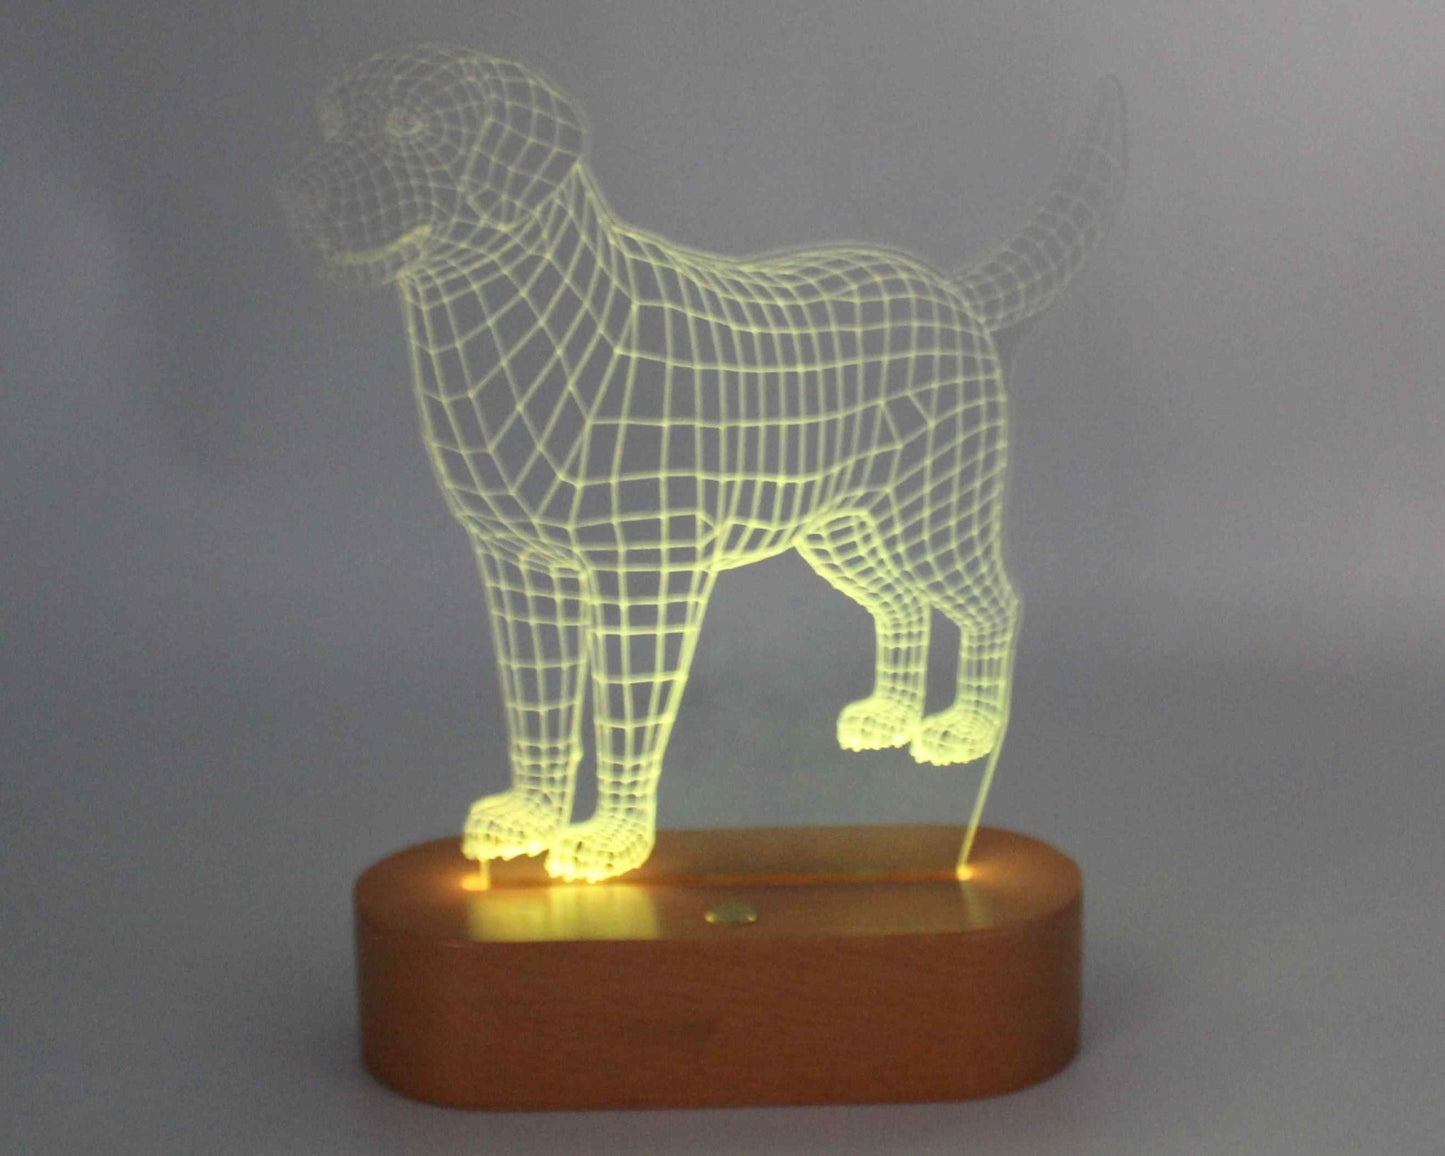 Dog 3D Illusion Night Light - Haisley Design